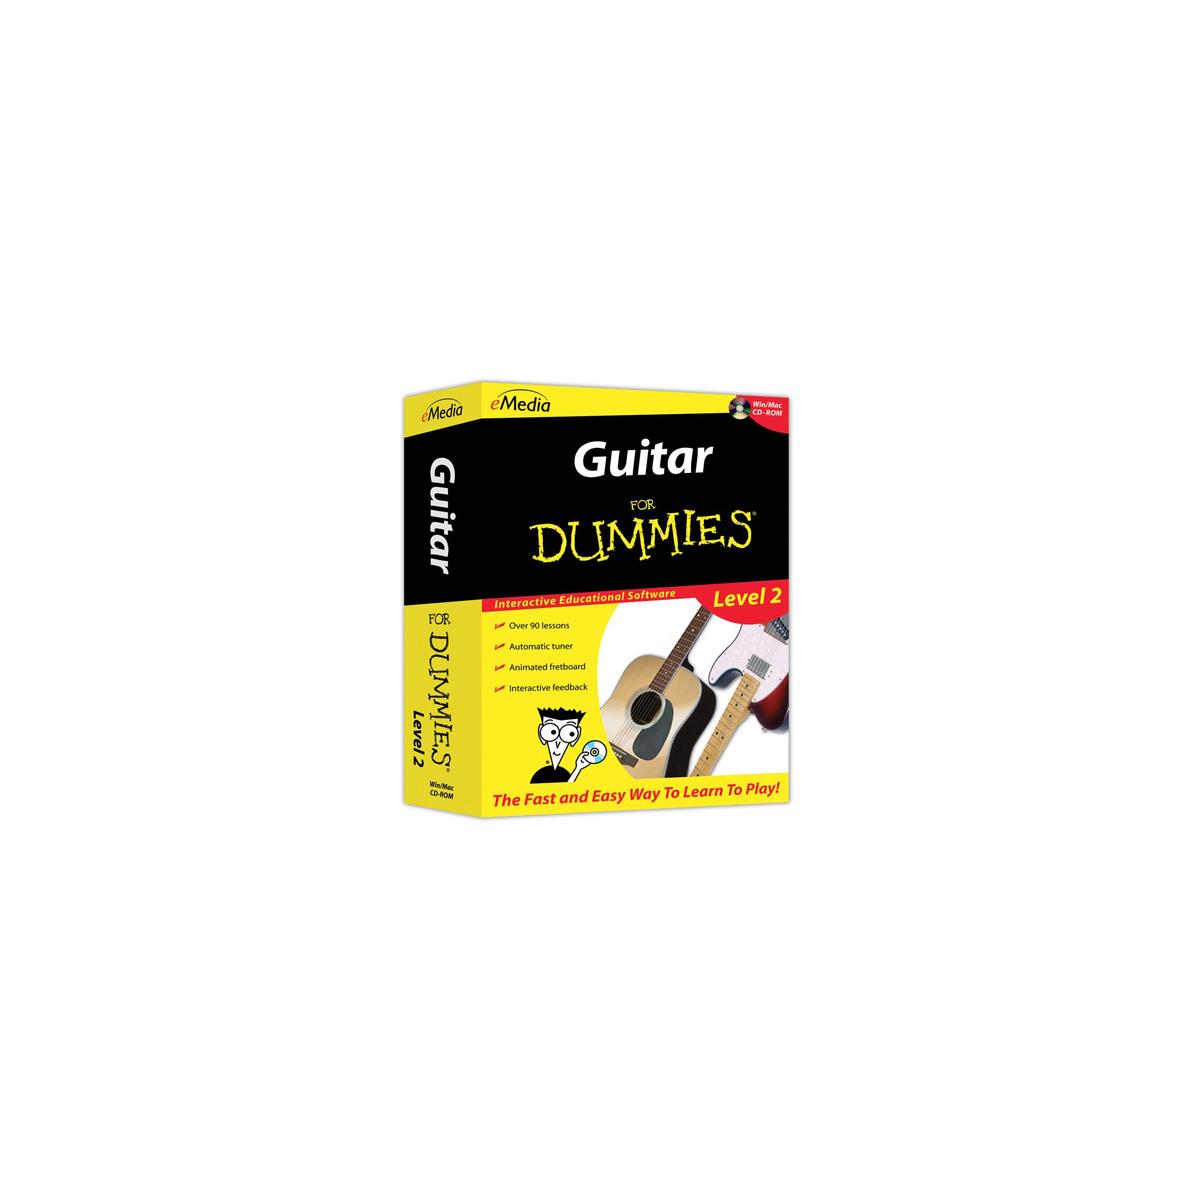 Image of eMedia Guitar for Dummies Level 2 - CD-ROM